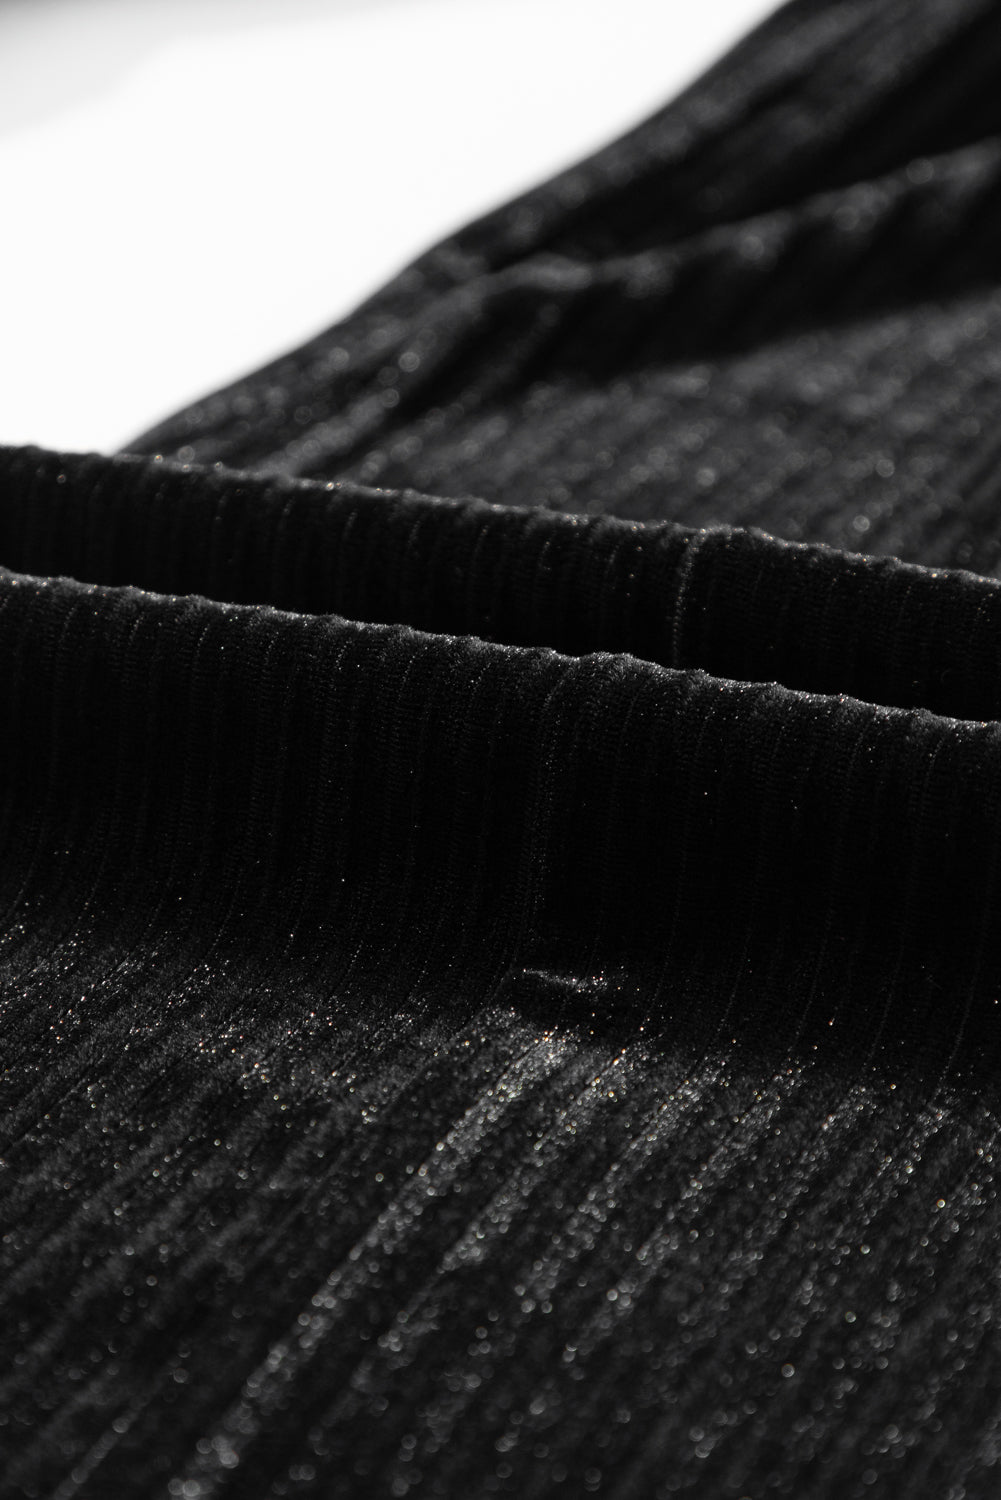 Black Solid Color High Waist Flare Corduroy Pants